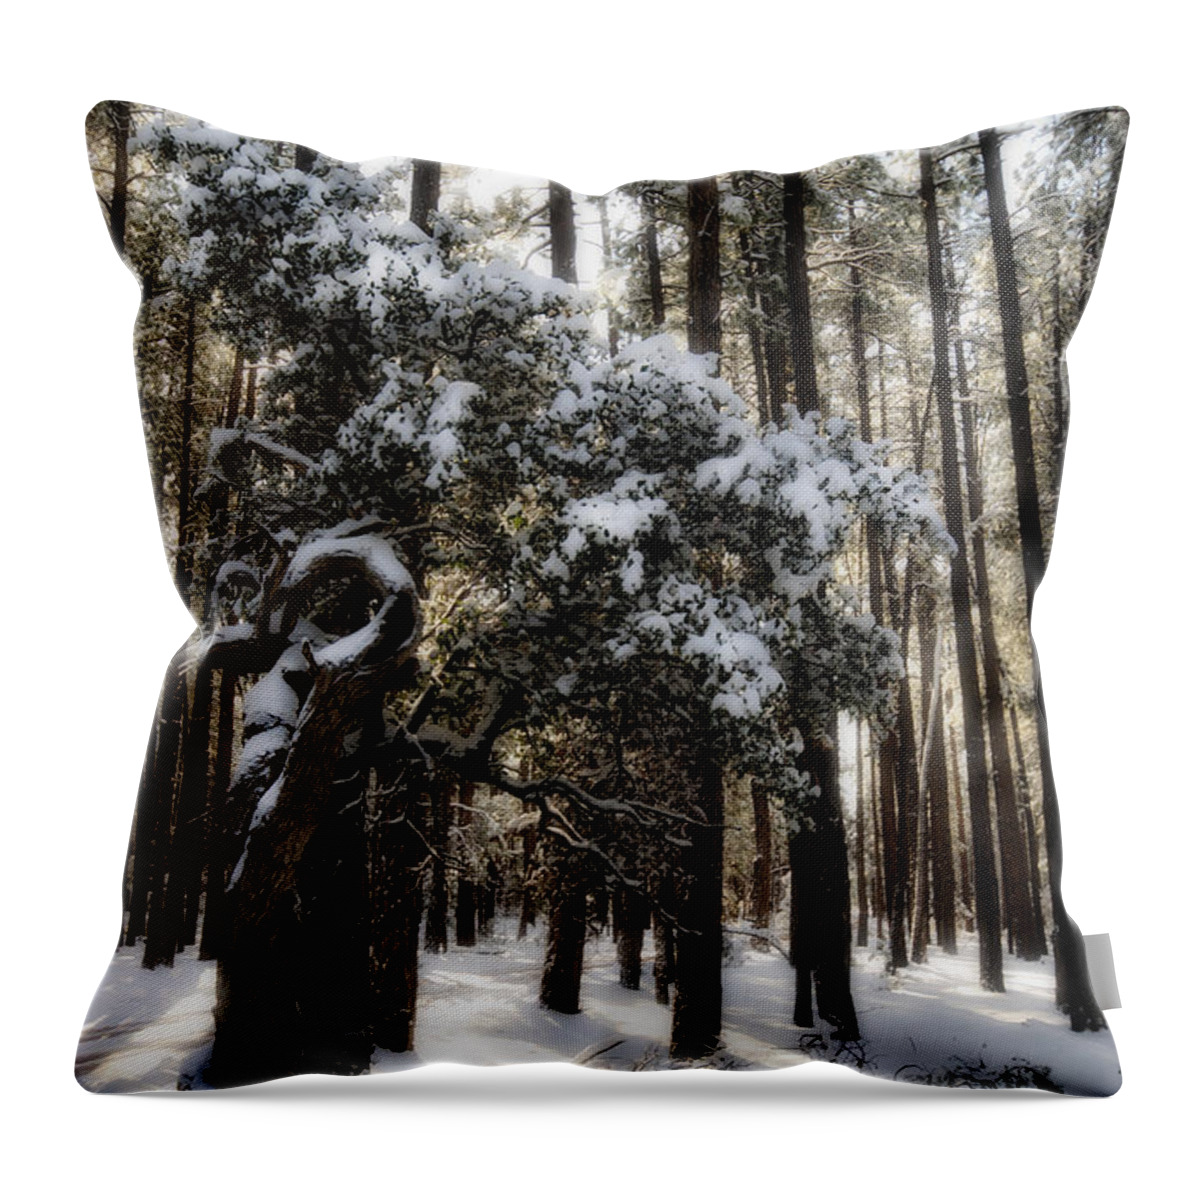 Snow Throw Pillow featuring the photograph Snow Day by Saija Lehtonen